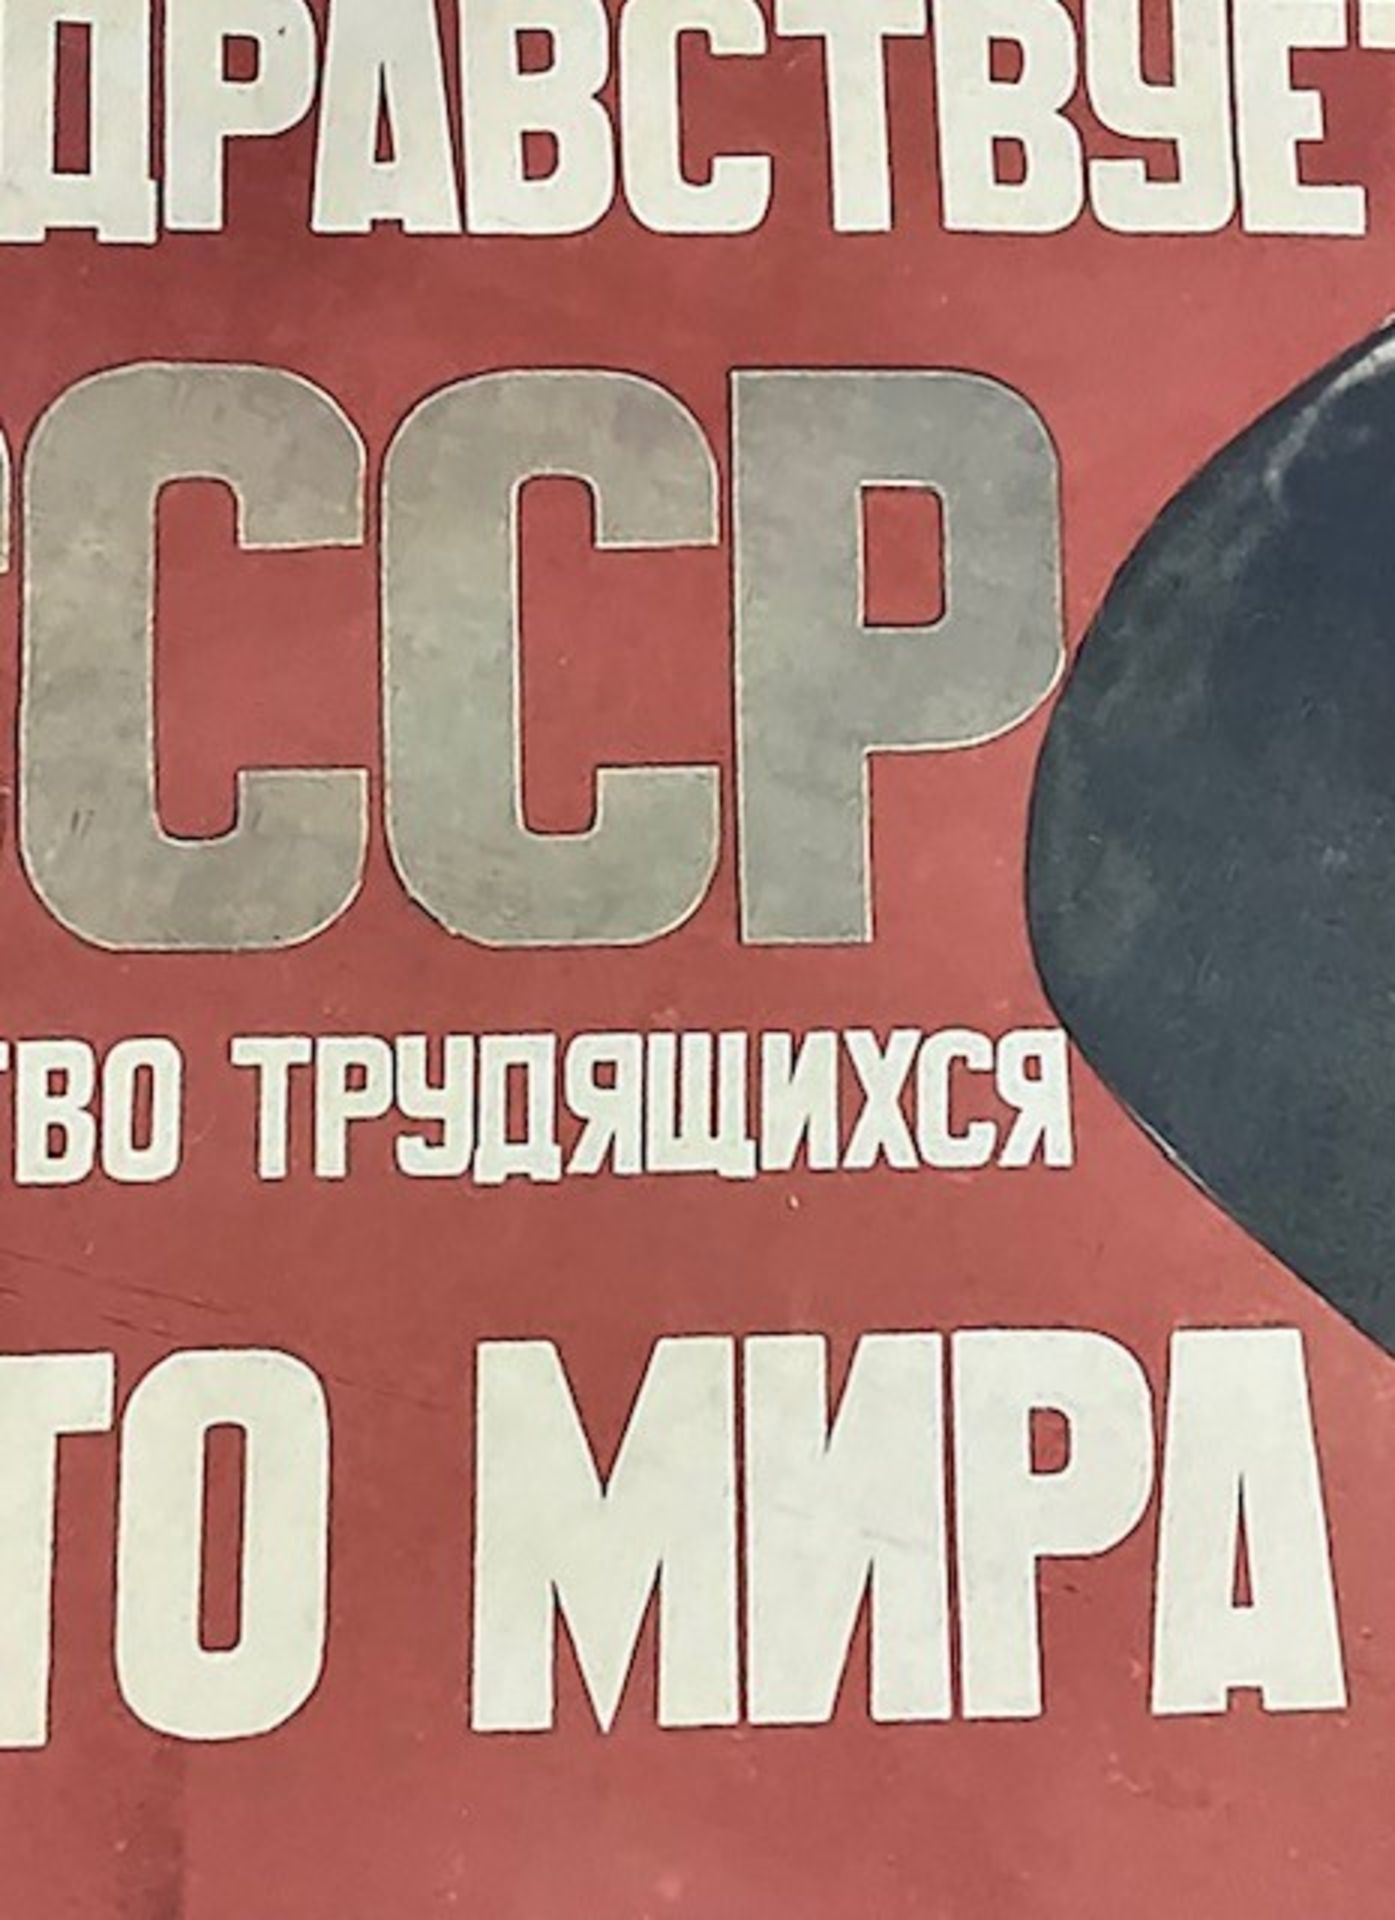 USSR Sovit Union Propaganda Poster - Image 10 of 11